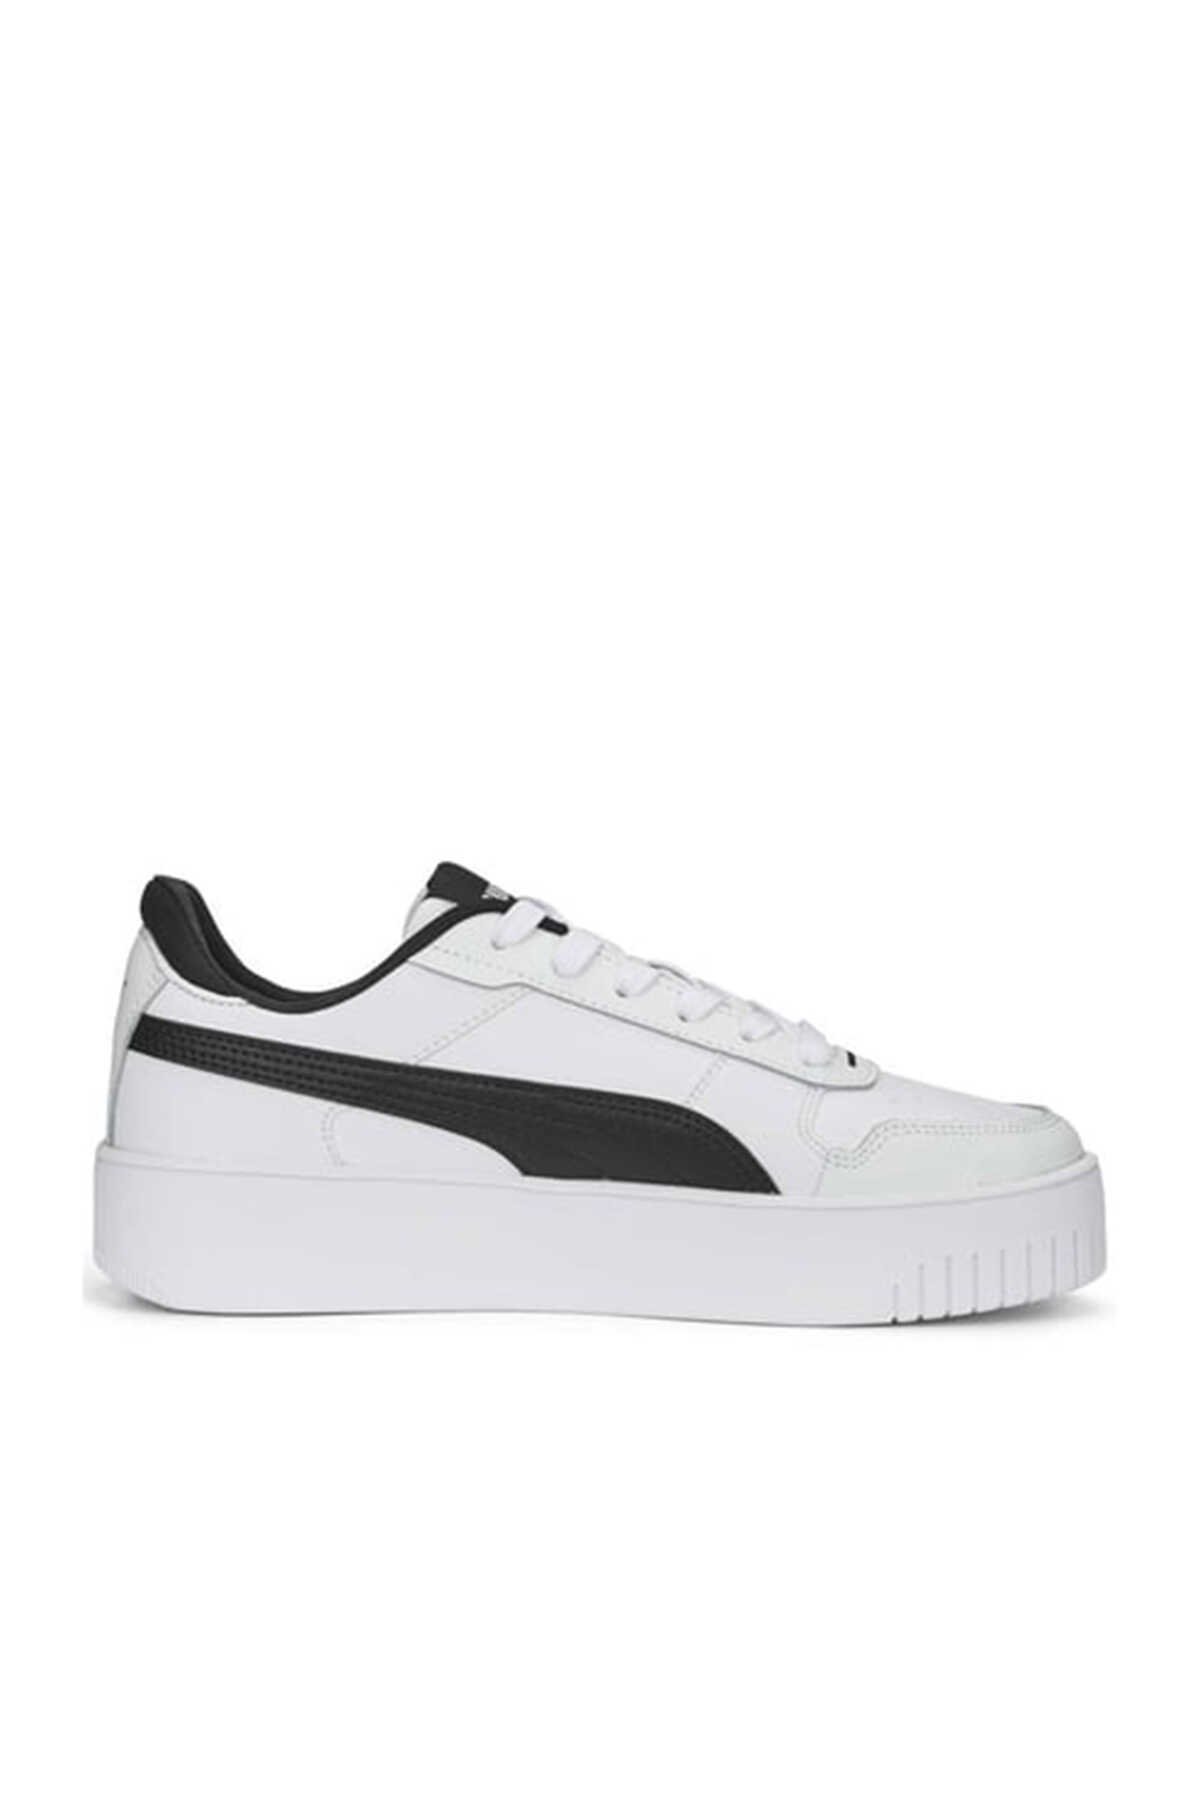 Puma - Puma Carina Street Kadın Sneaker Ayakkabı Beyaz / Siyah